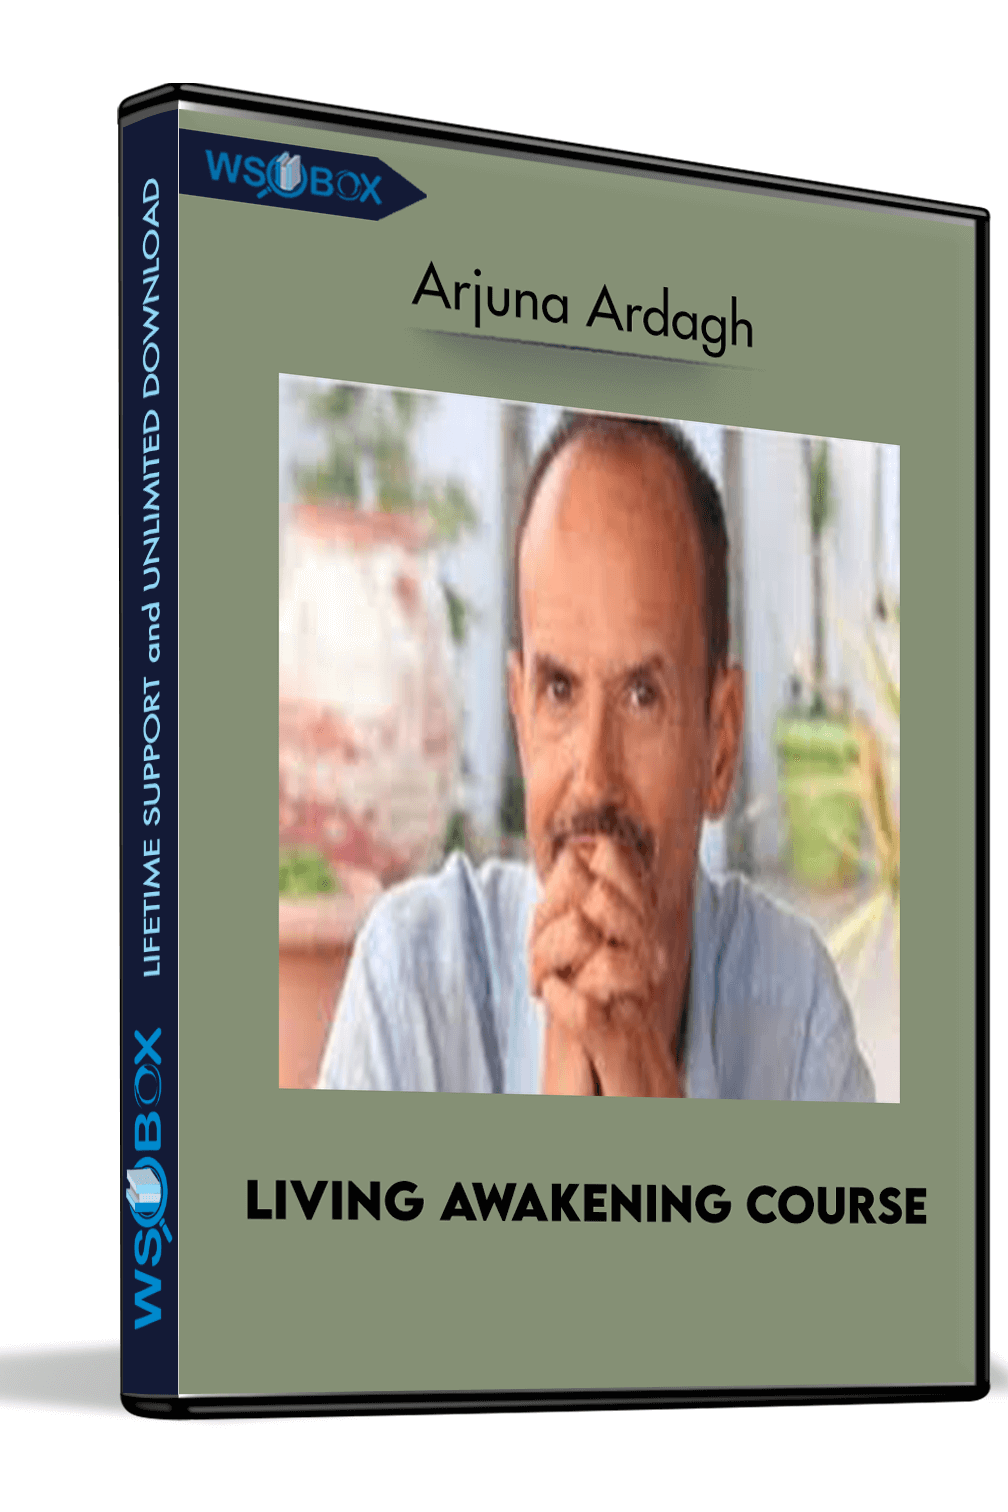 living-awakening-course-arjuna-ardagh